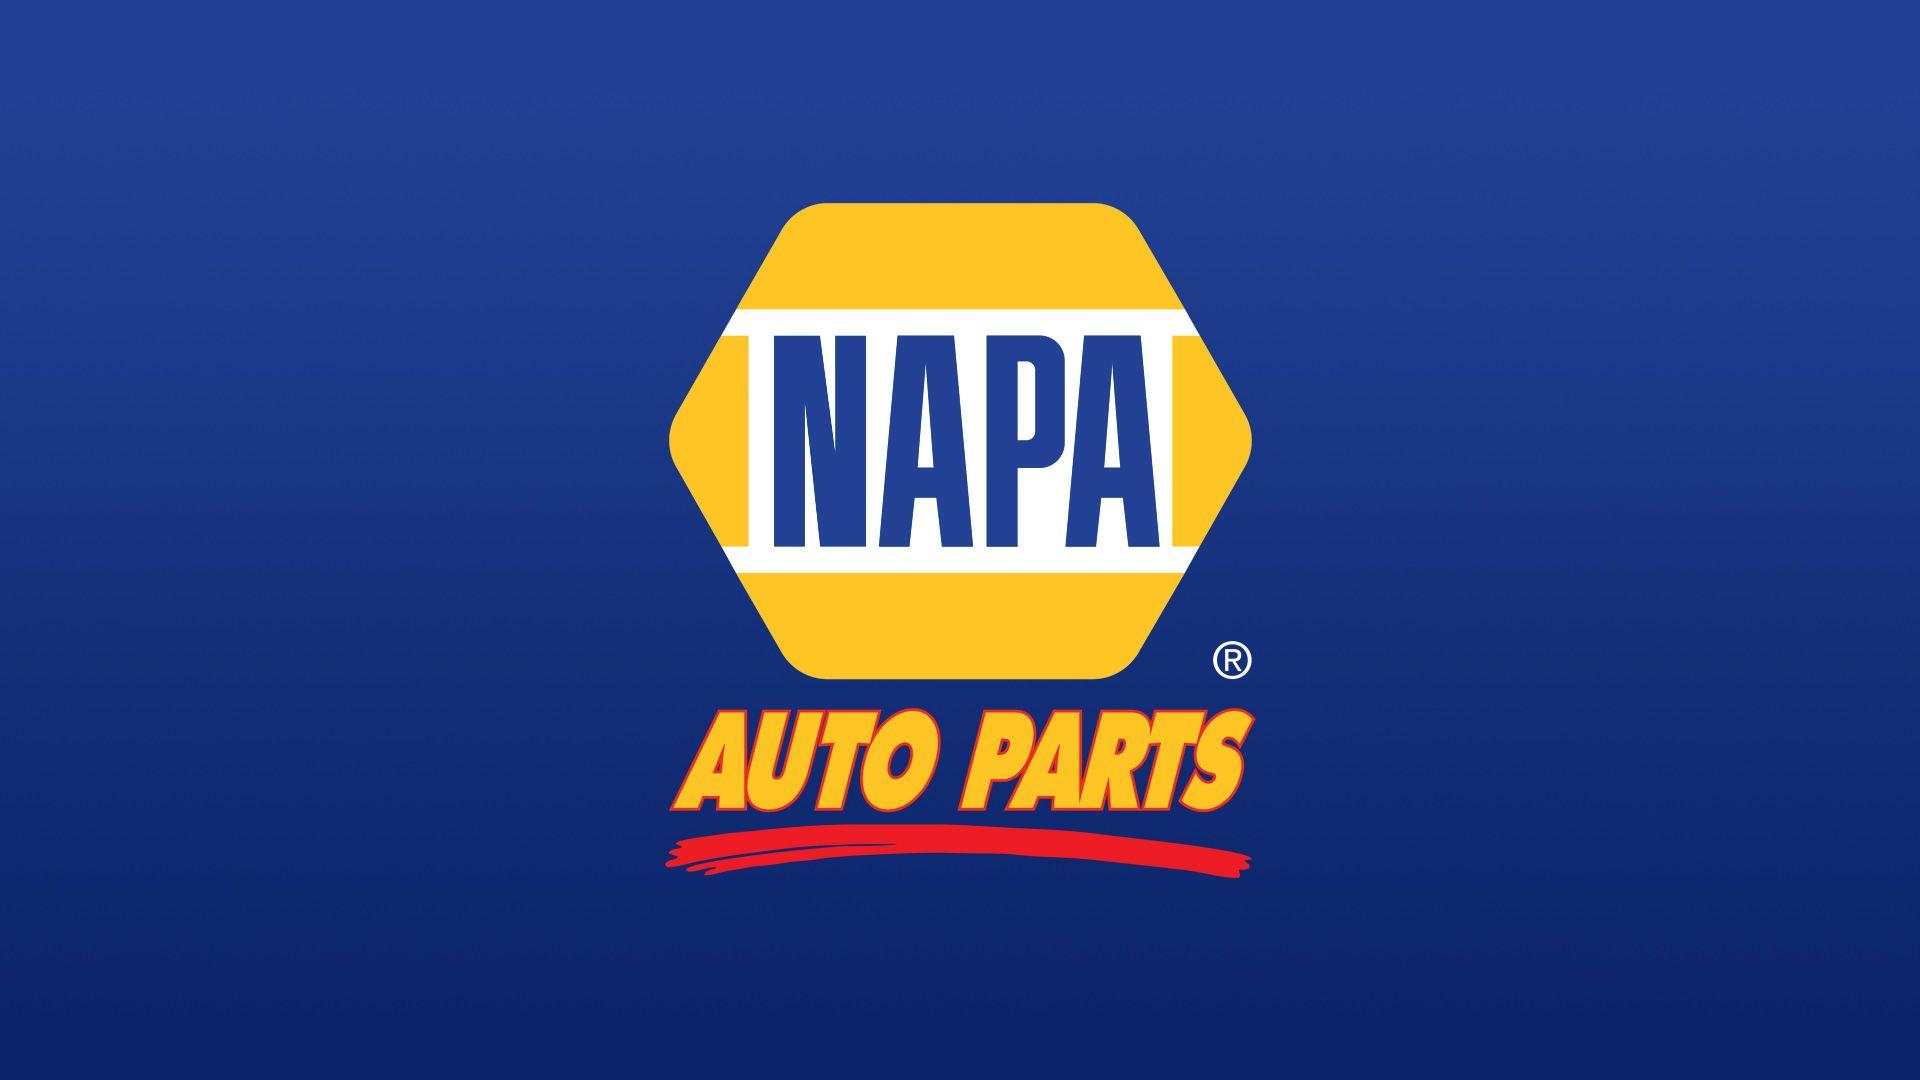 Napa Auto Parts Logo - Napa auto parts Logos